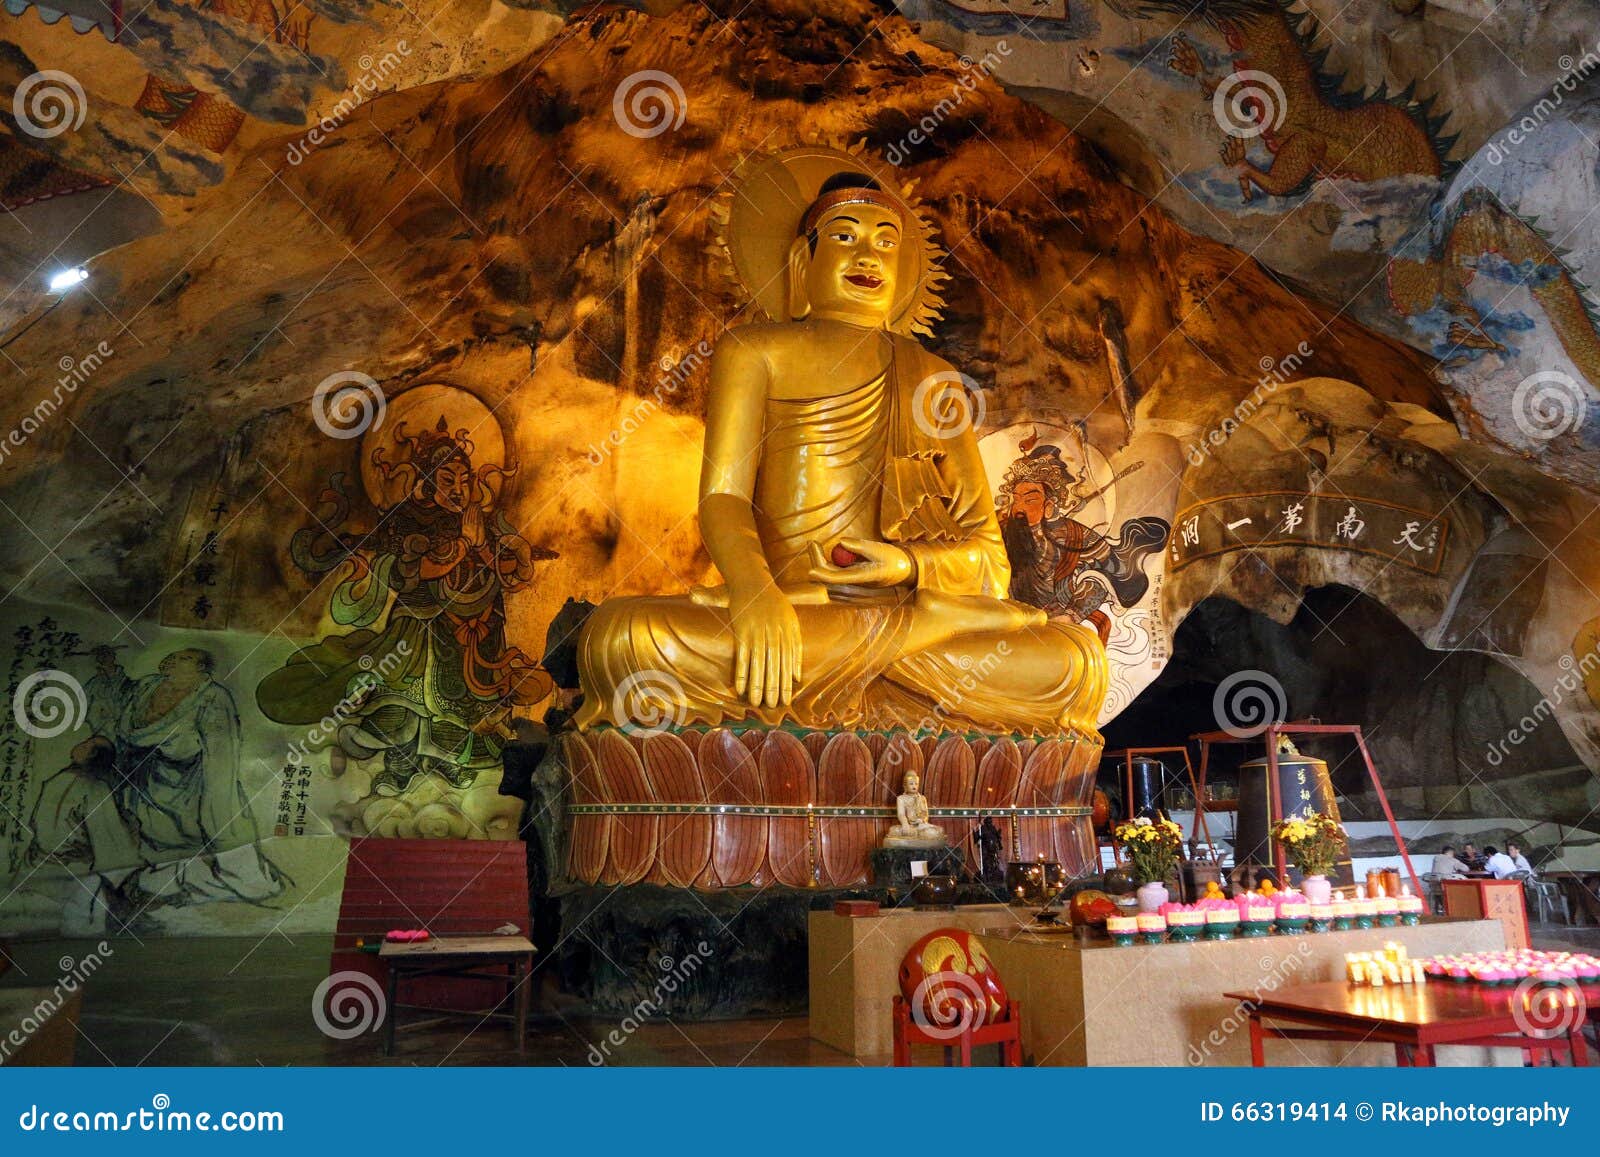 perak tong cave temple, ipoh, perak, malaysia